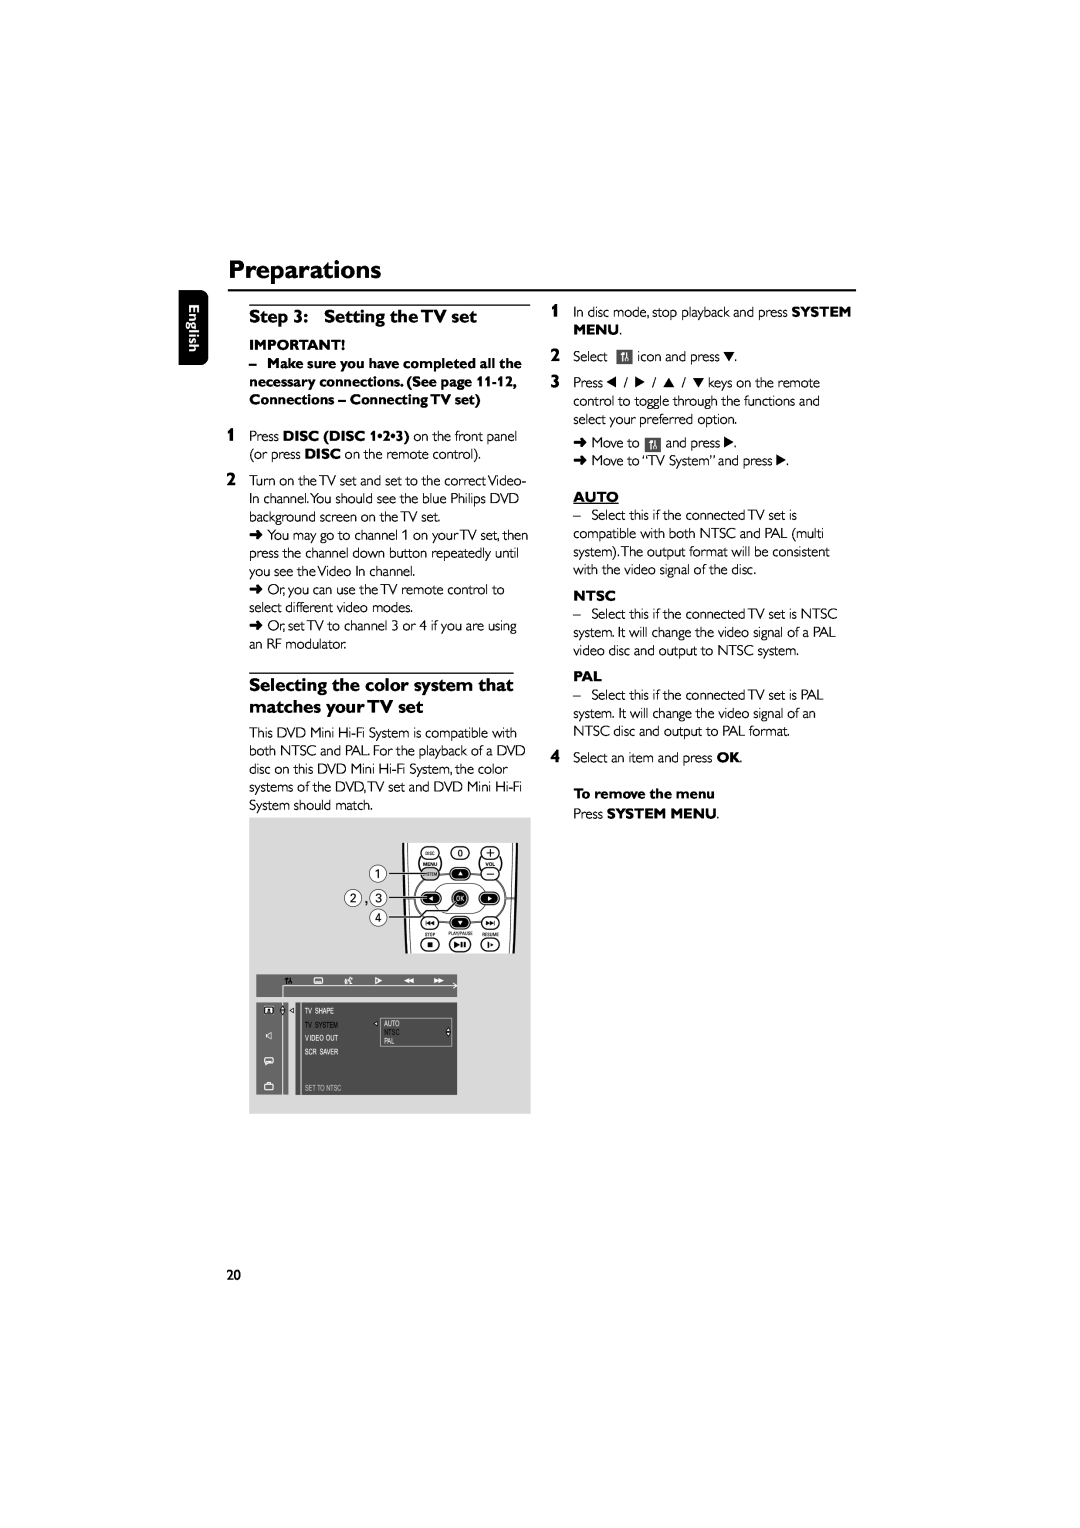 Philips FW-D550 manual 1 2,3, Setting the TV set, Auto, Ntsc, Preparations, English, To remove the menu Press SYSTEM MENU 